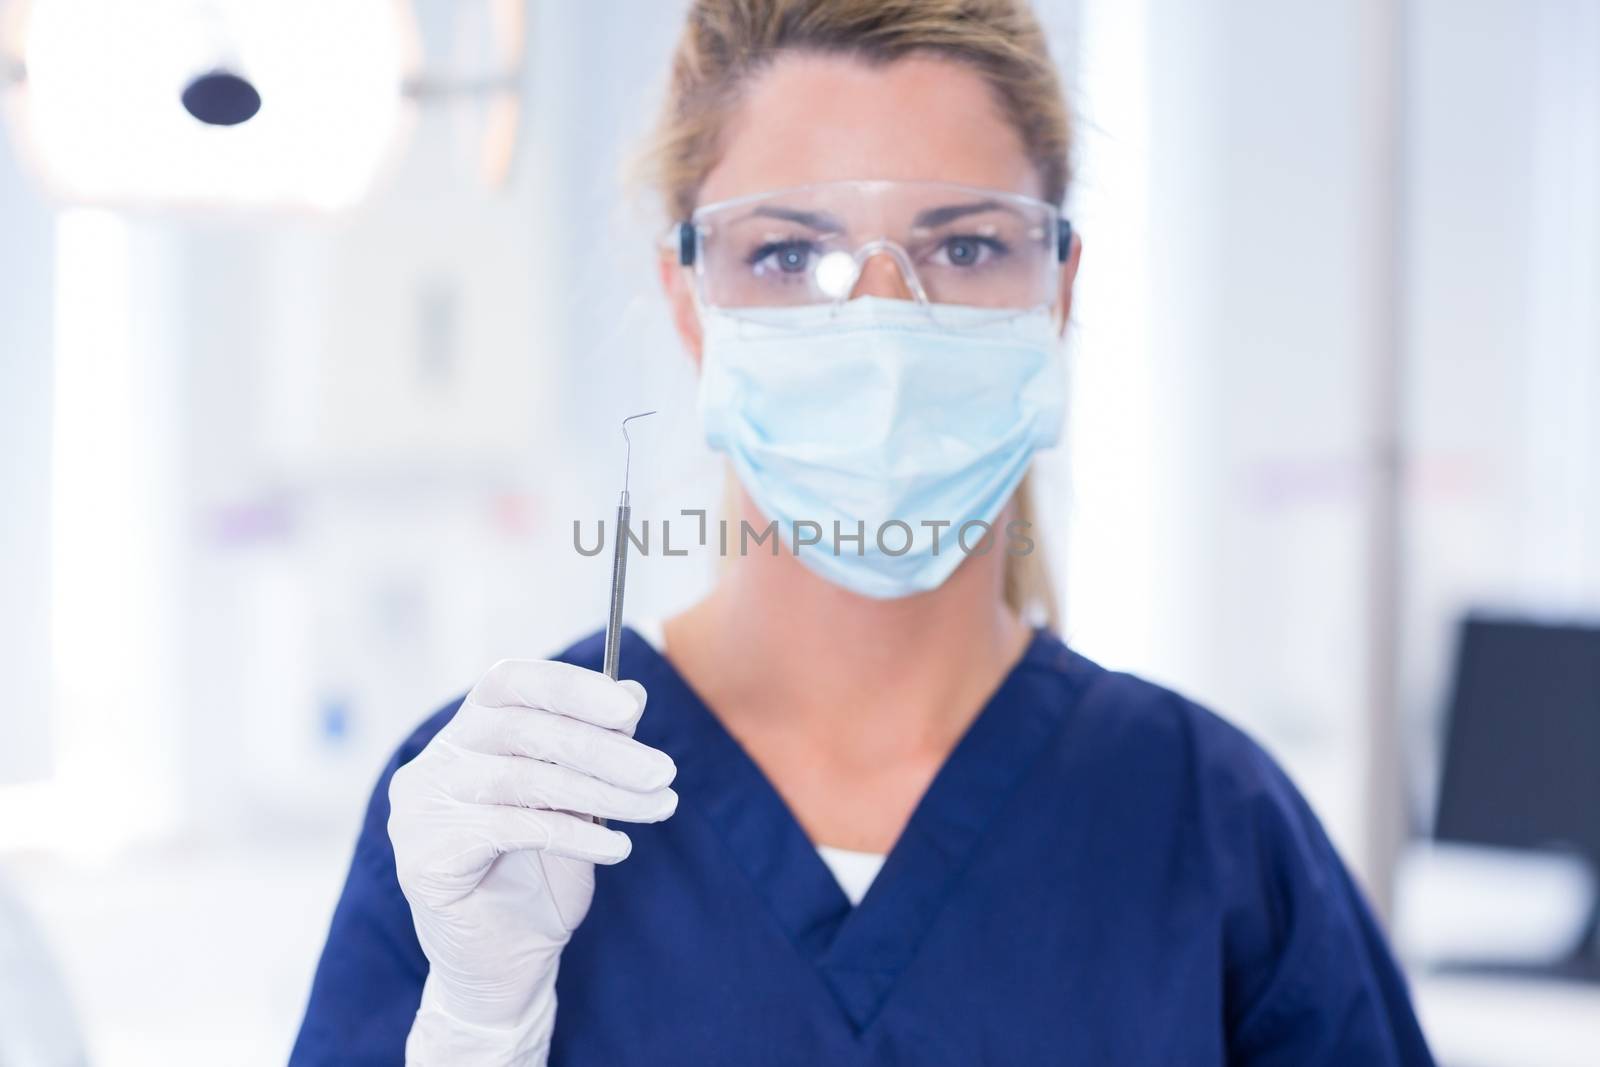 Dentist in mask holding dental explorer at the dental clinic